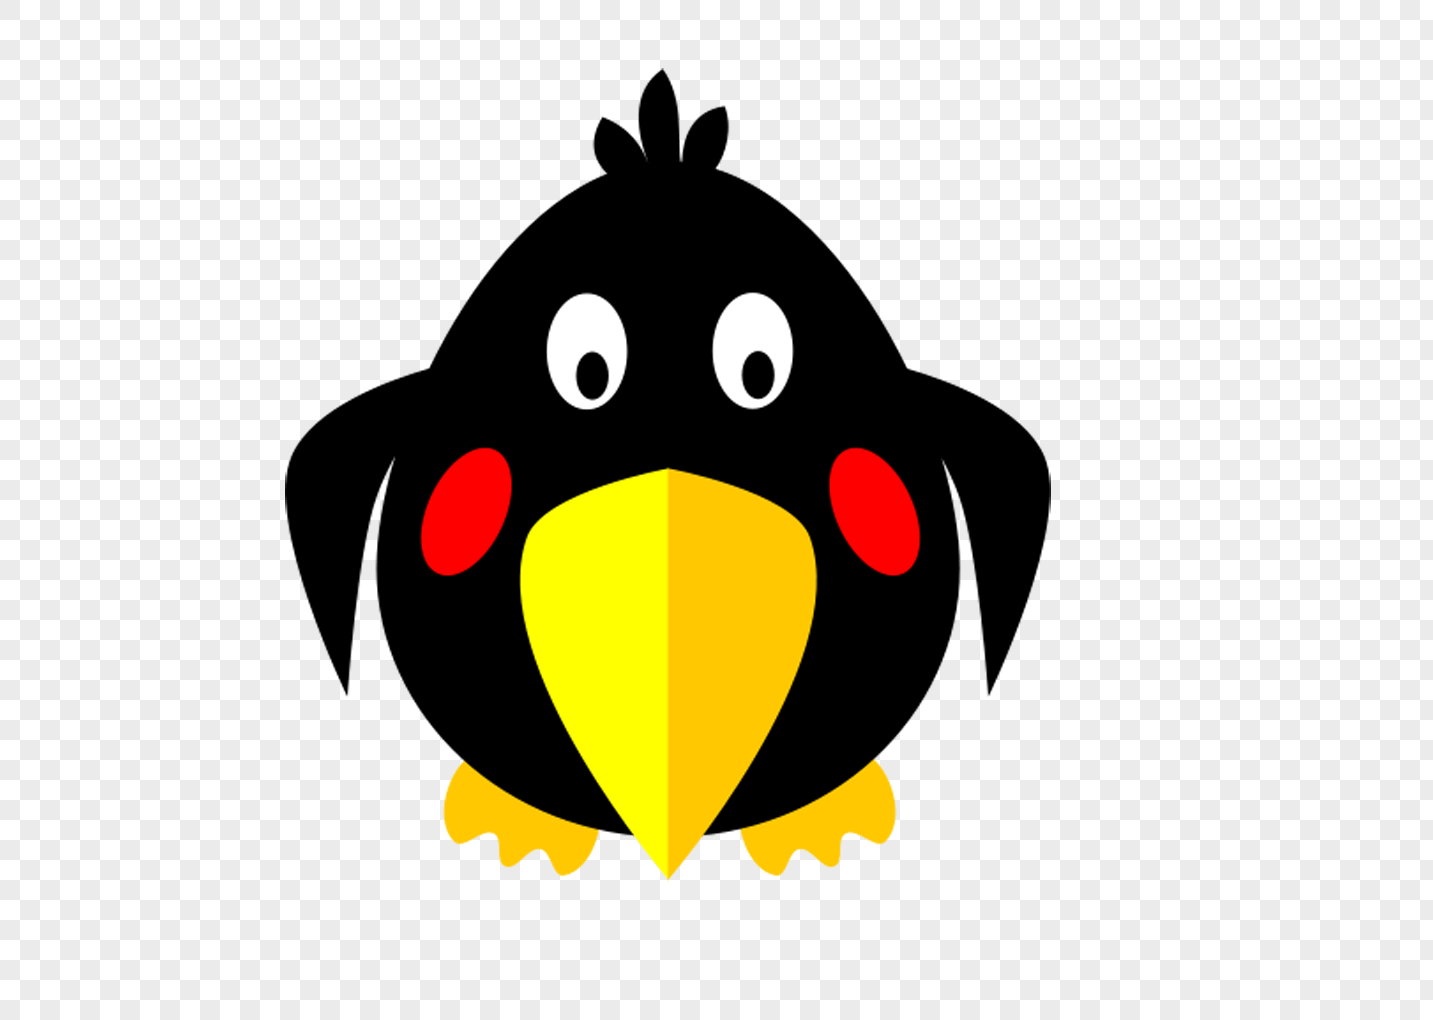 Black Bird Cartoon Logo - Black bird png image_picture free download 400656227_lovepik.com